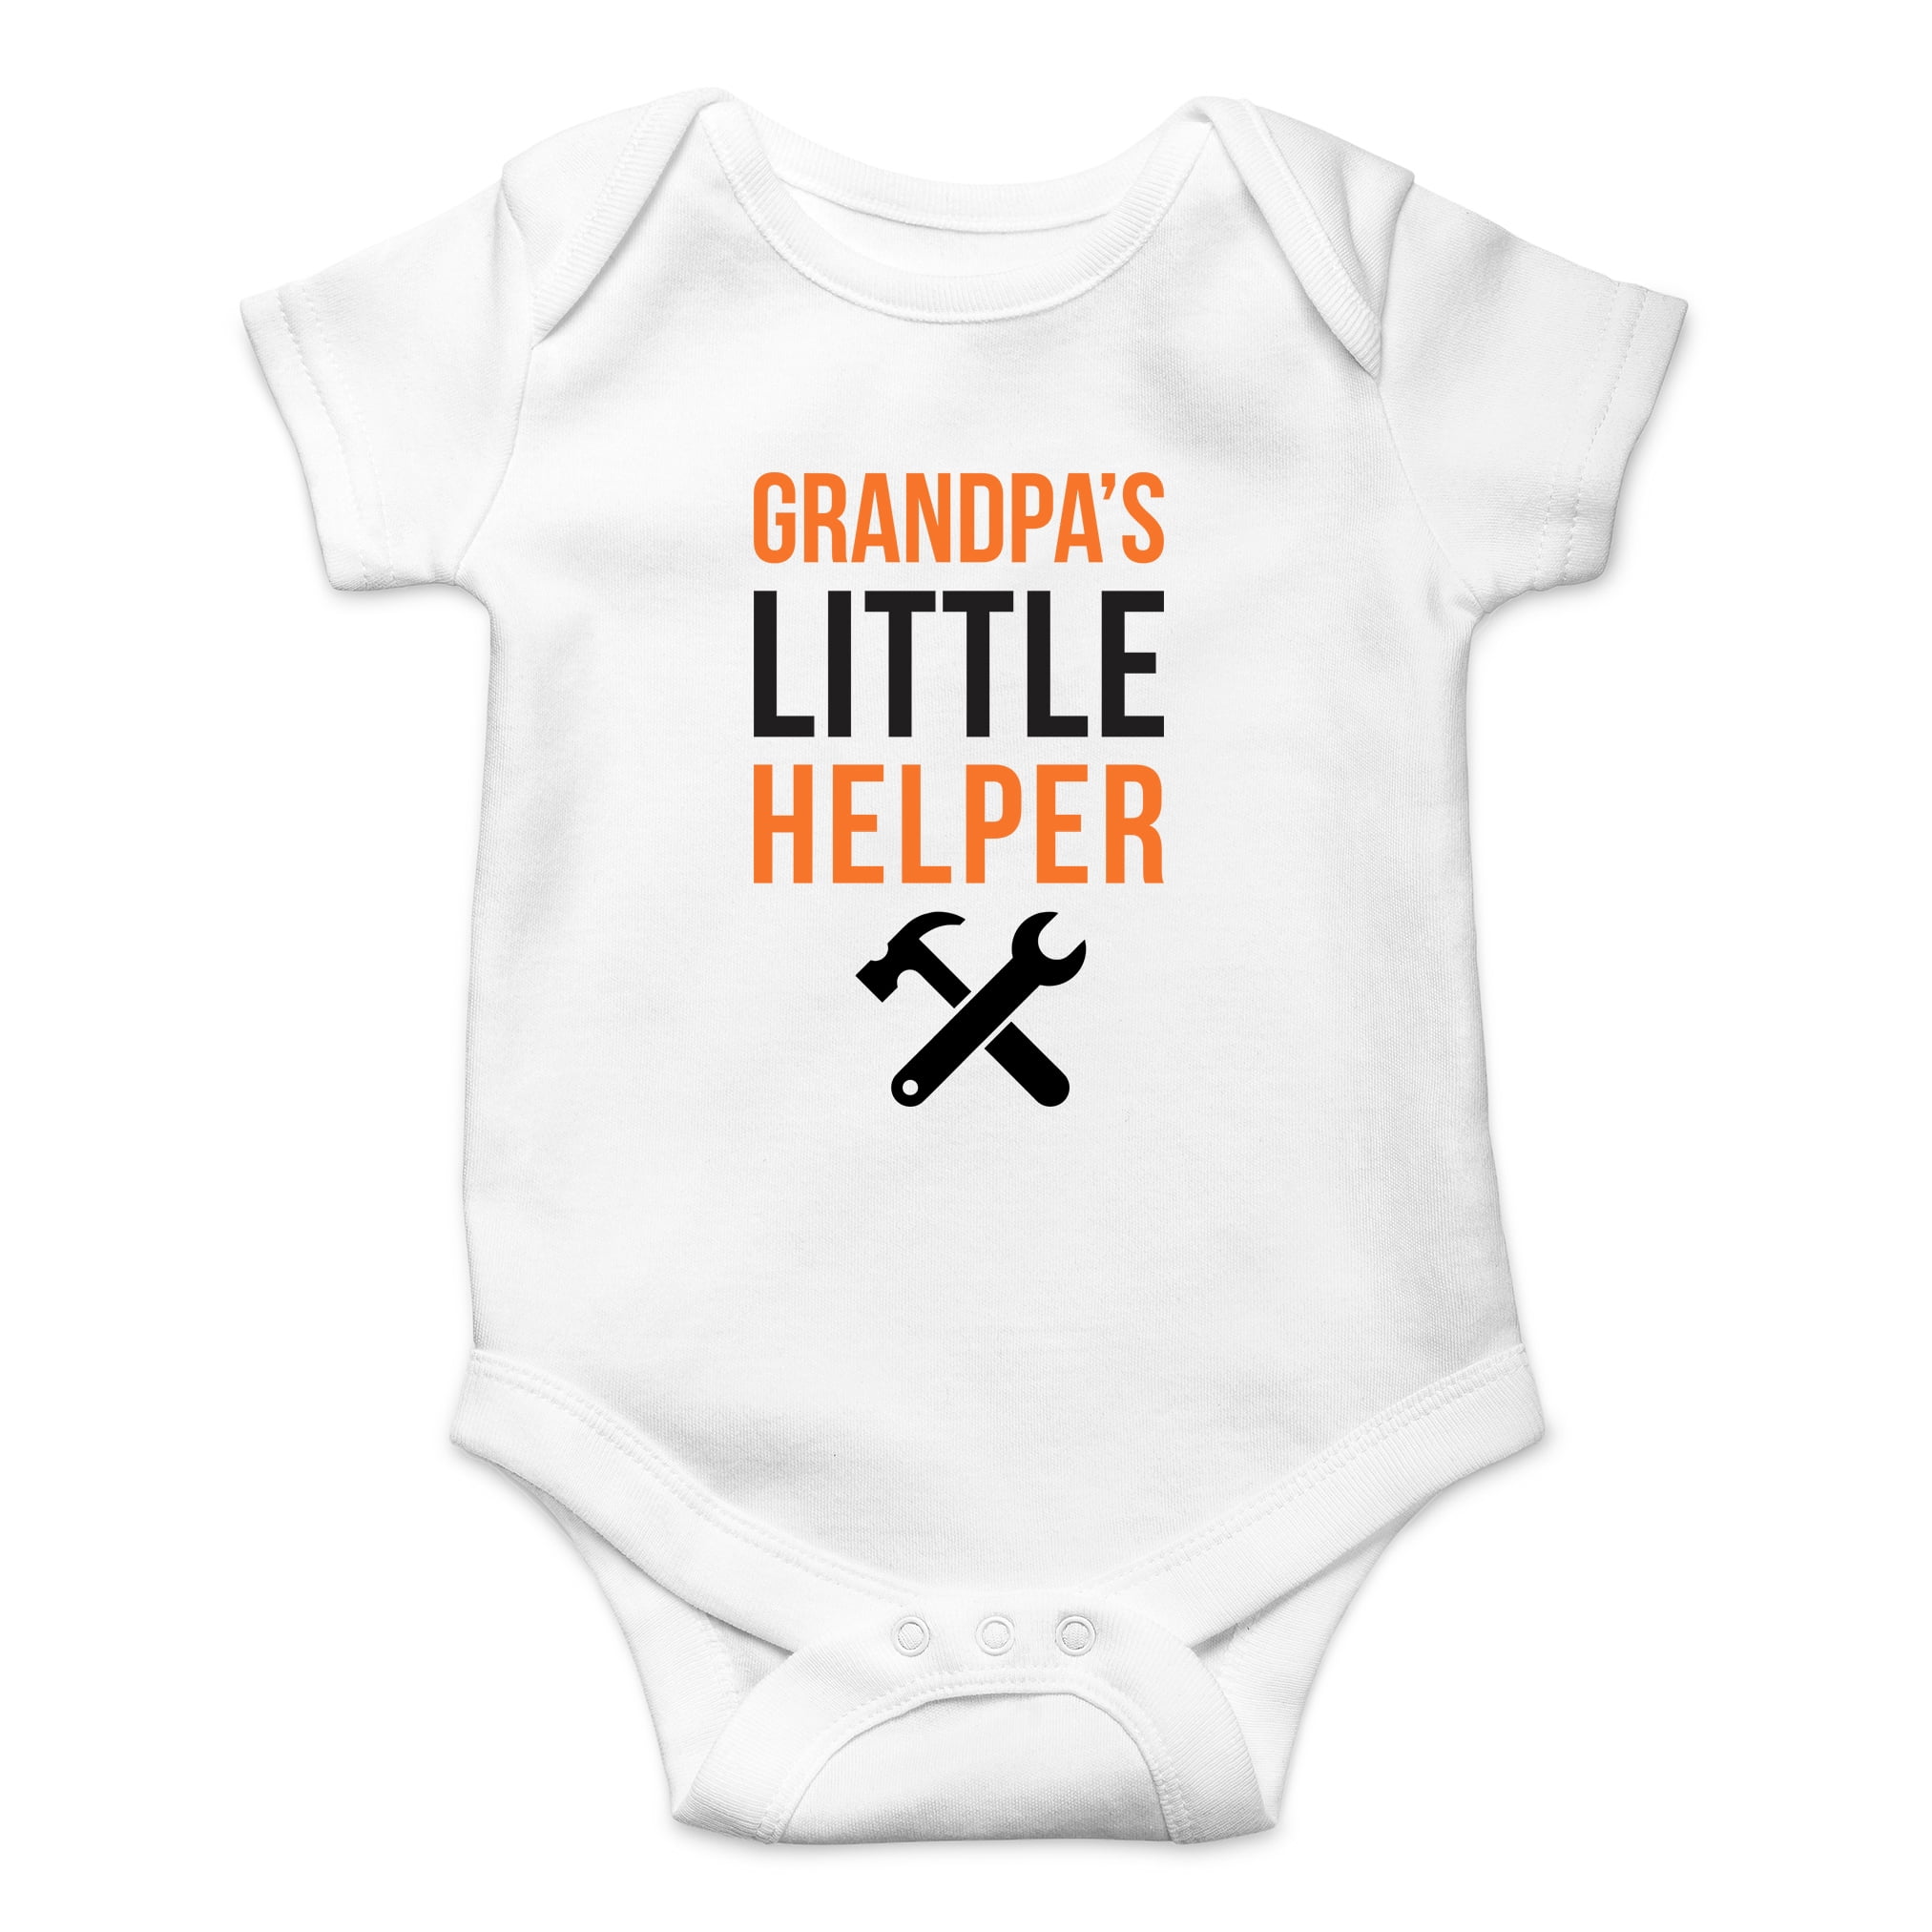 Grandpa smells one piece funny infant grandpop bodysuit 